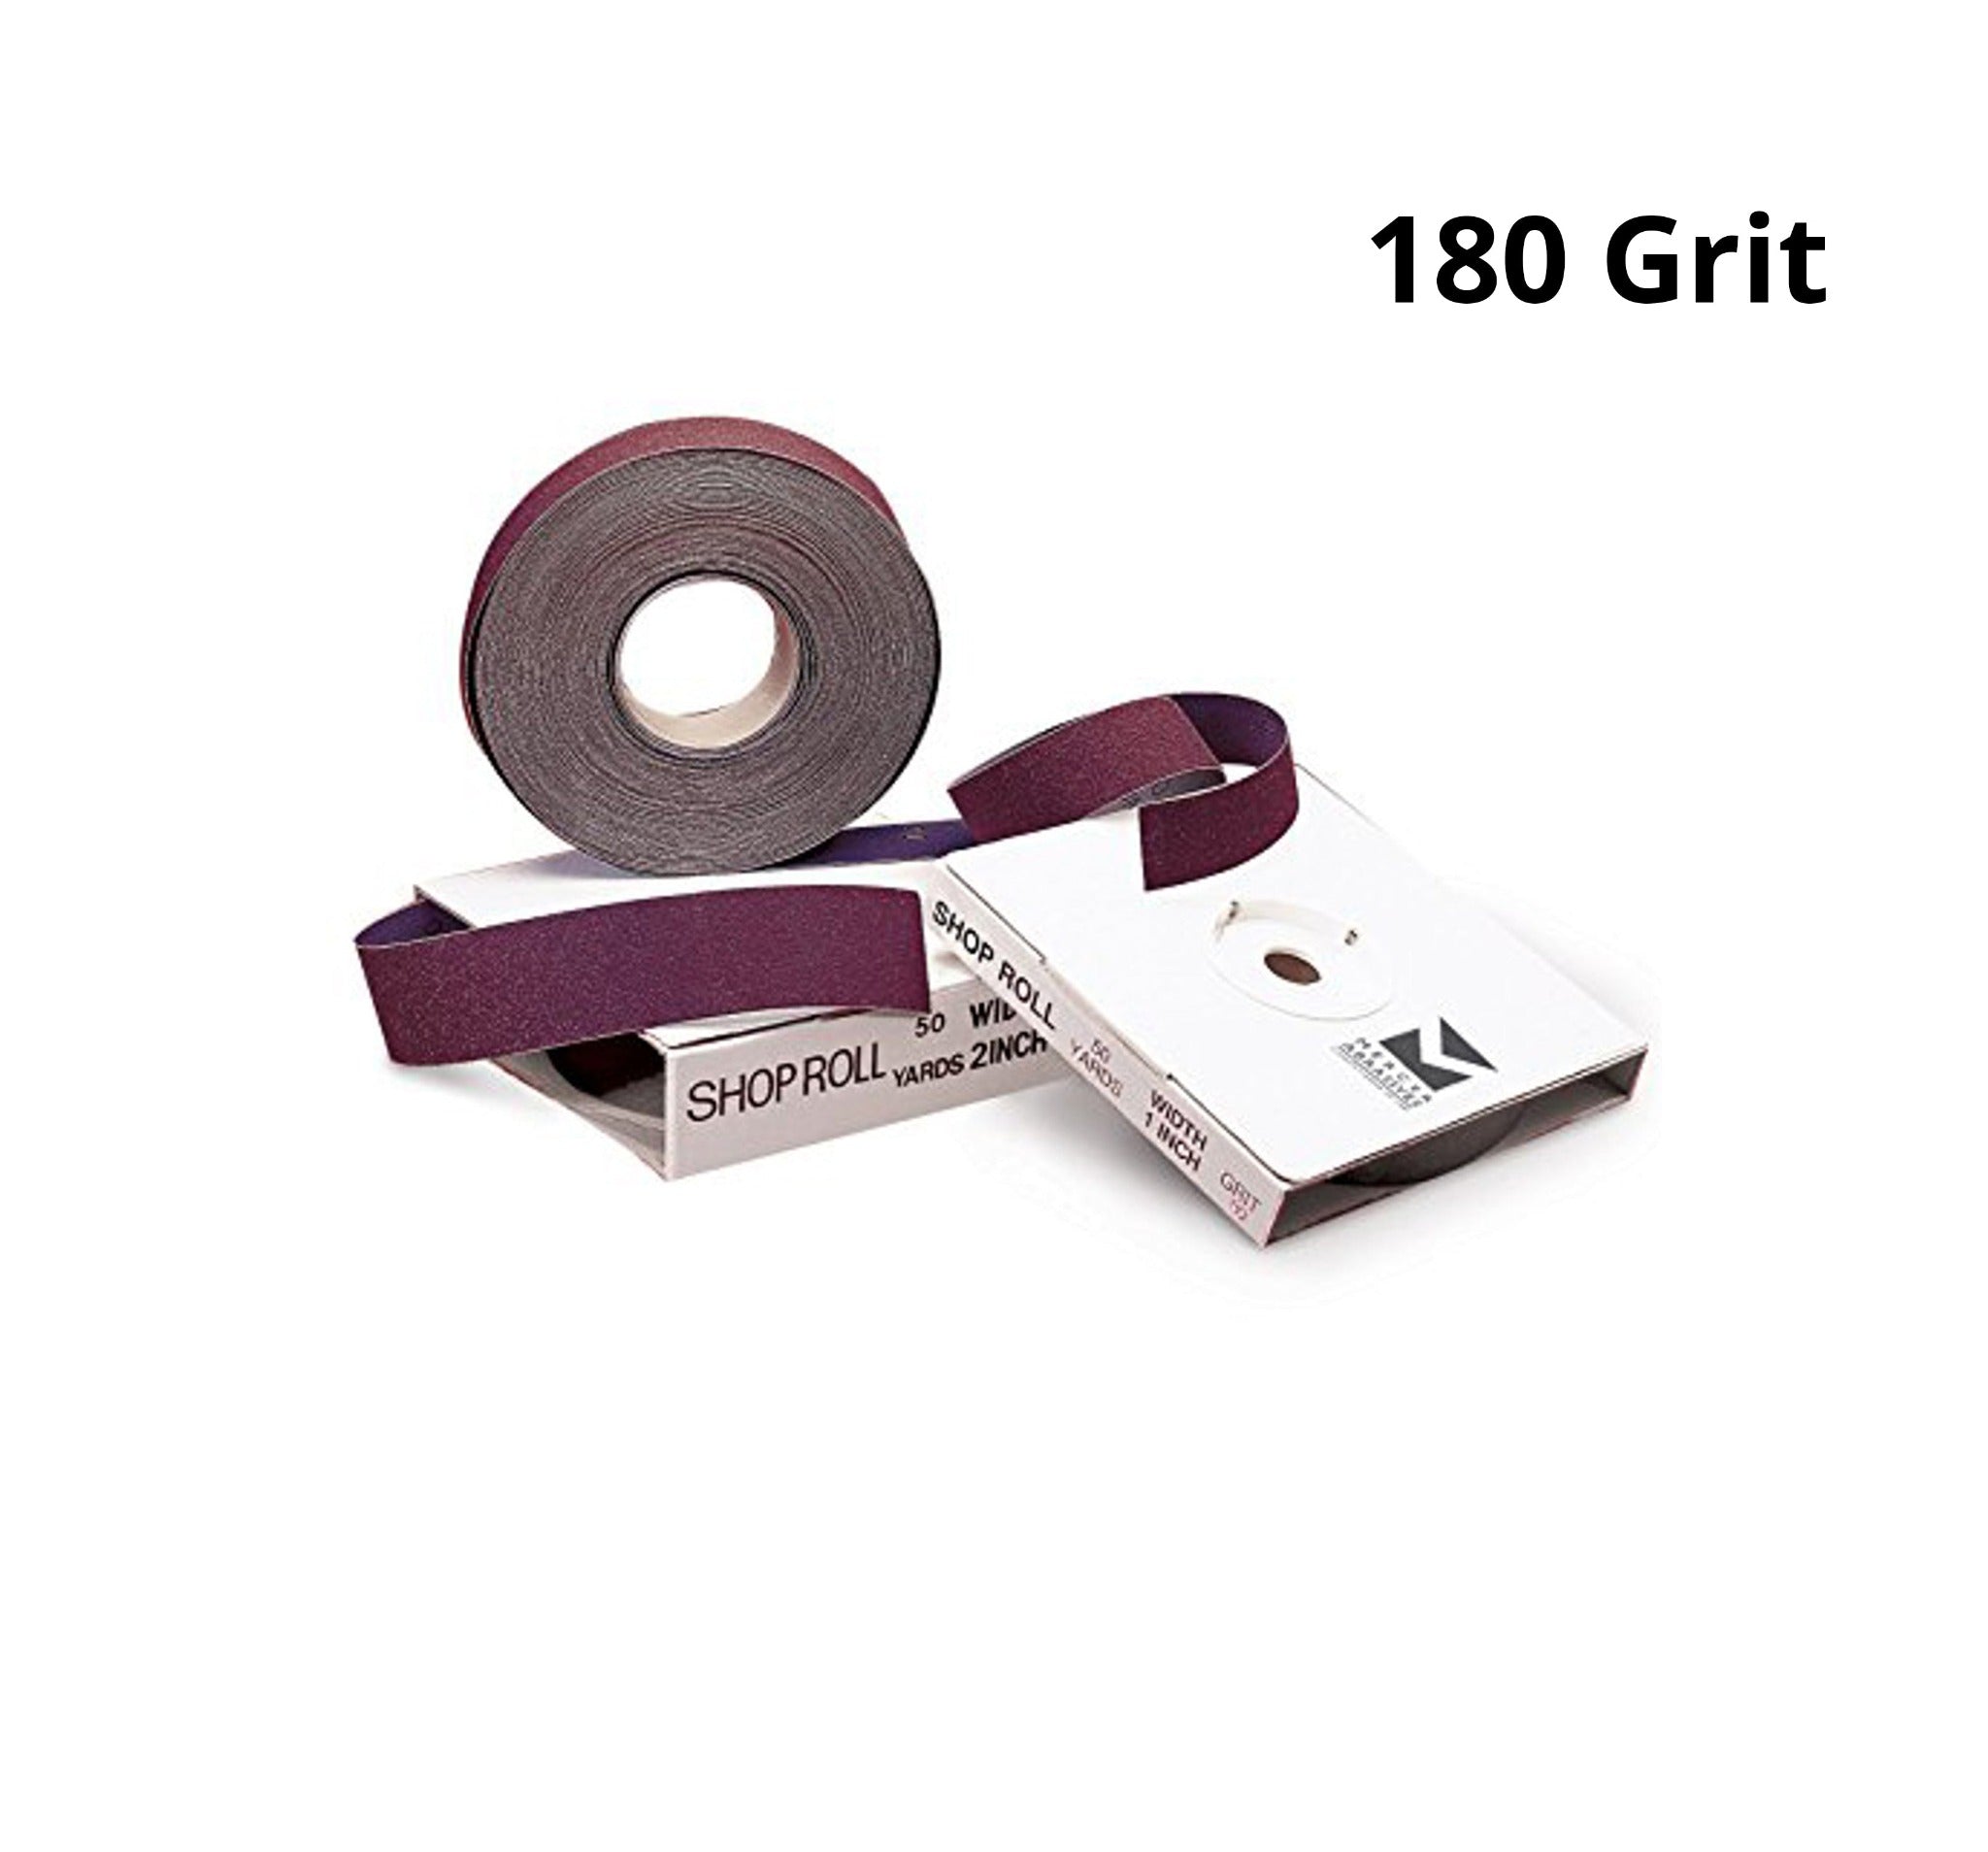 Aluminum Oxide Shop Roll 180 Grit 1” X 50 Yds